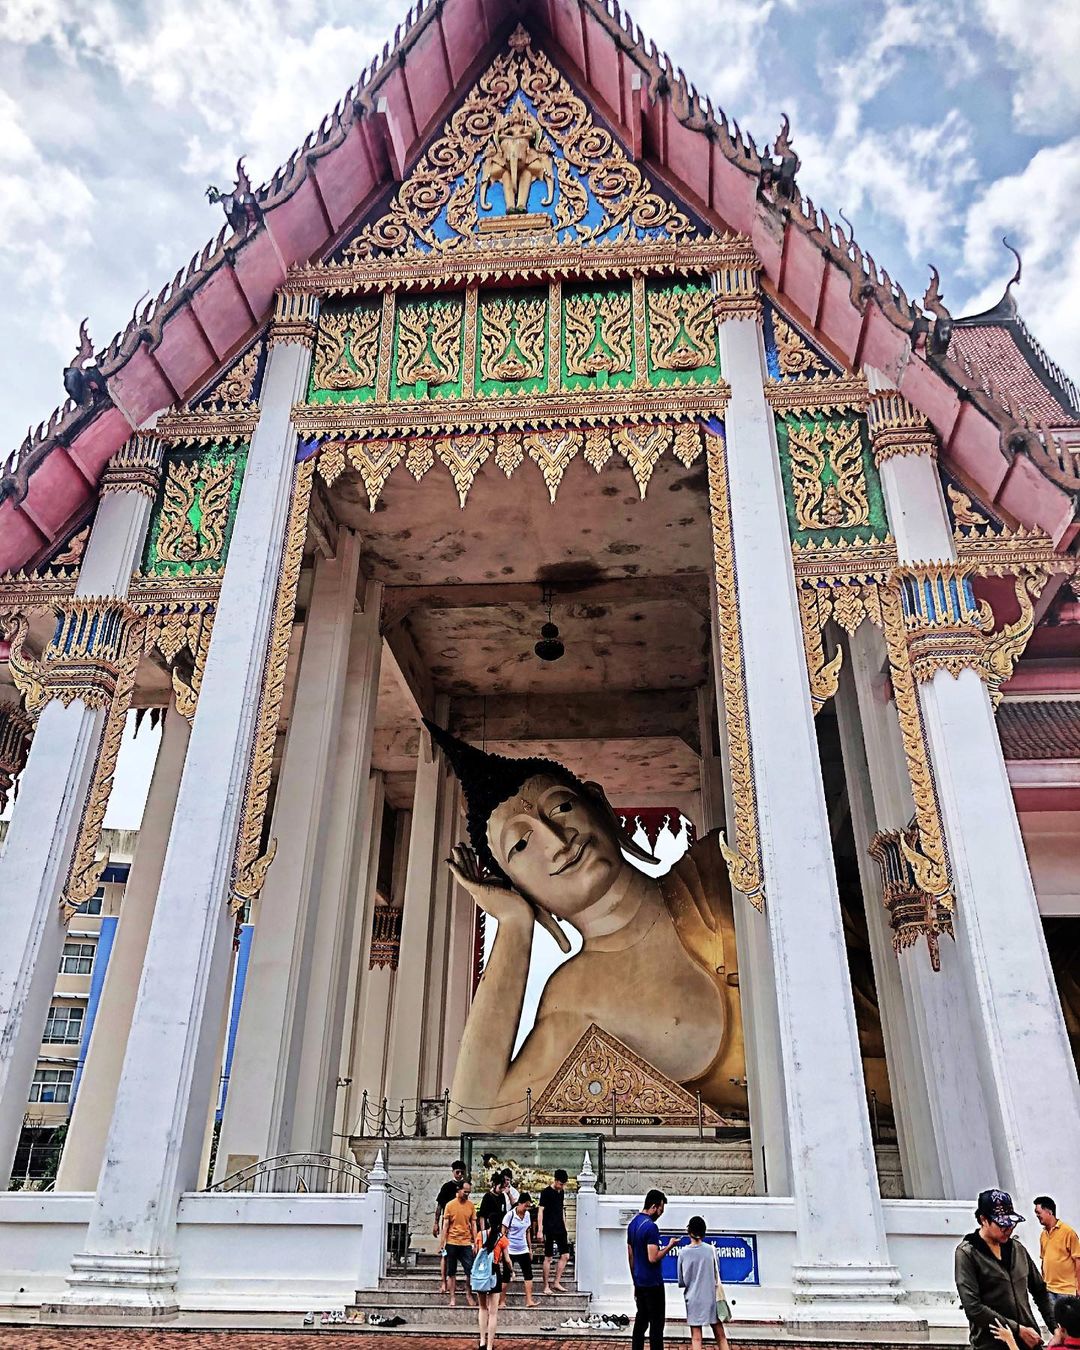 Short Flights from SG - Reclining Buddha Statue at Hat Yai, Thailand